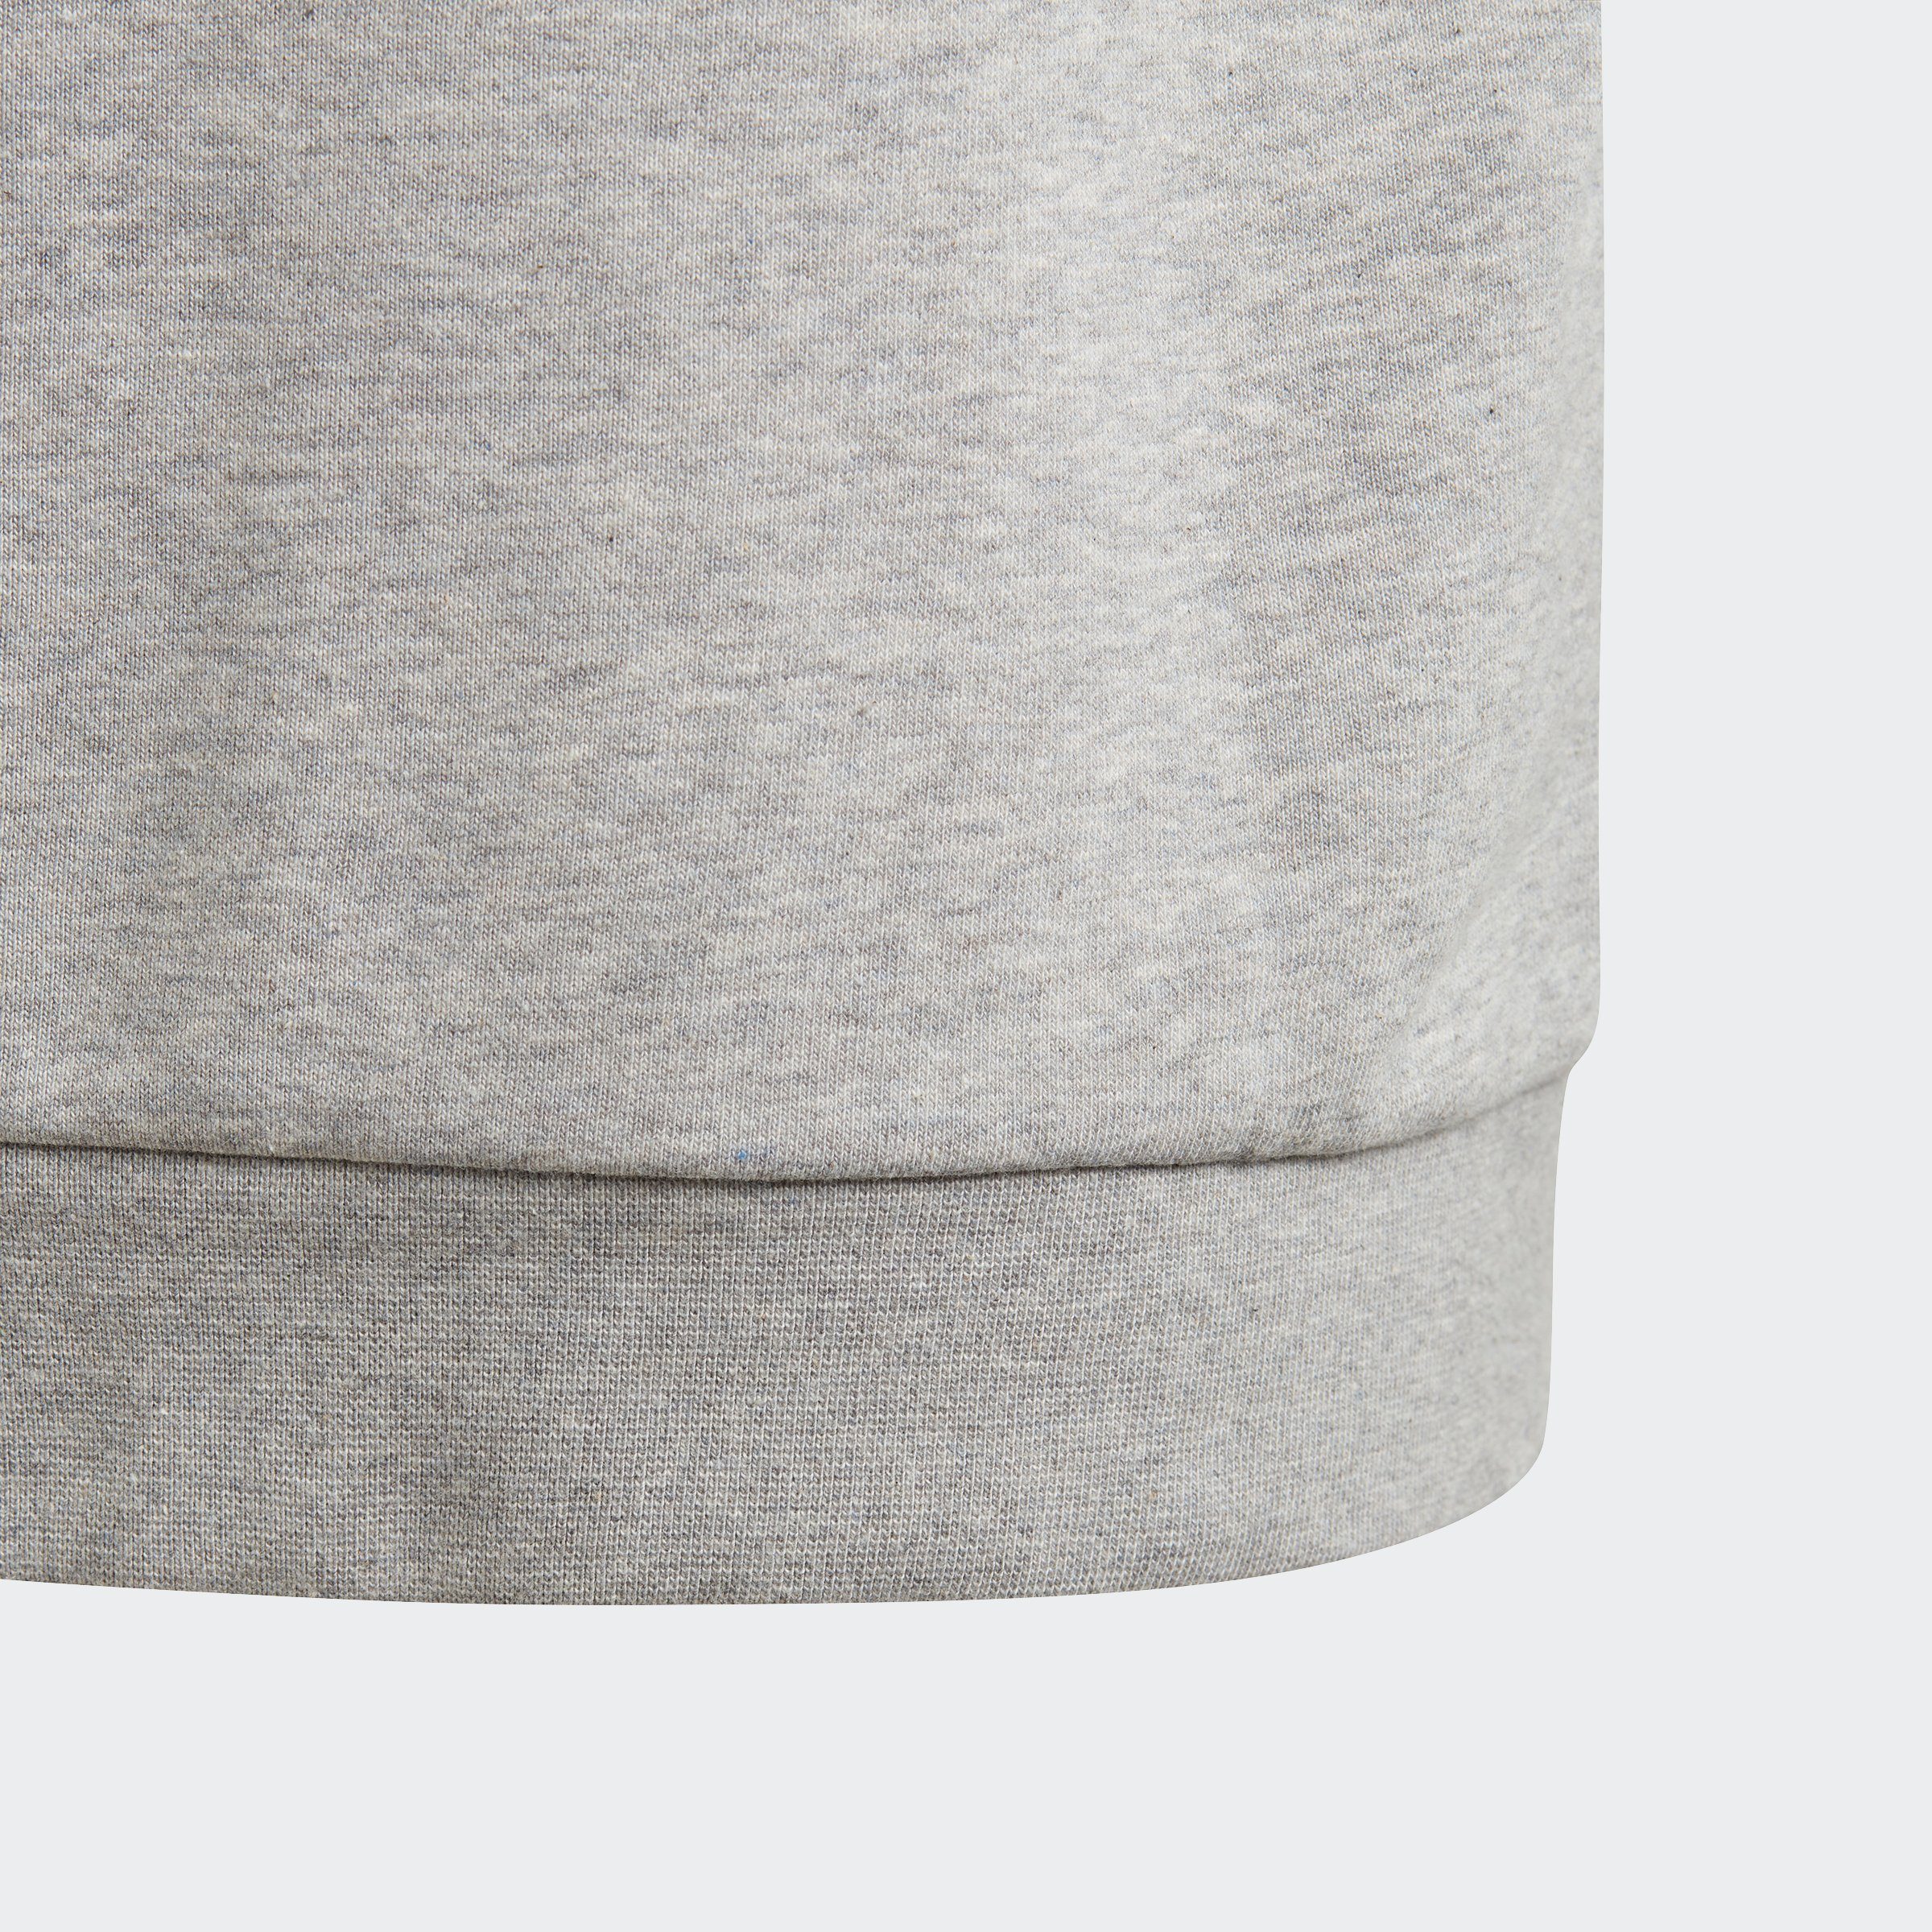 White / Grey TREFOIL Heather adidas Medium Originals HOODIE Sweatshirt